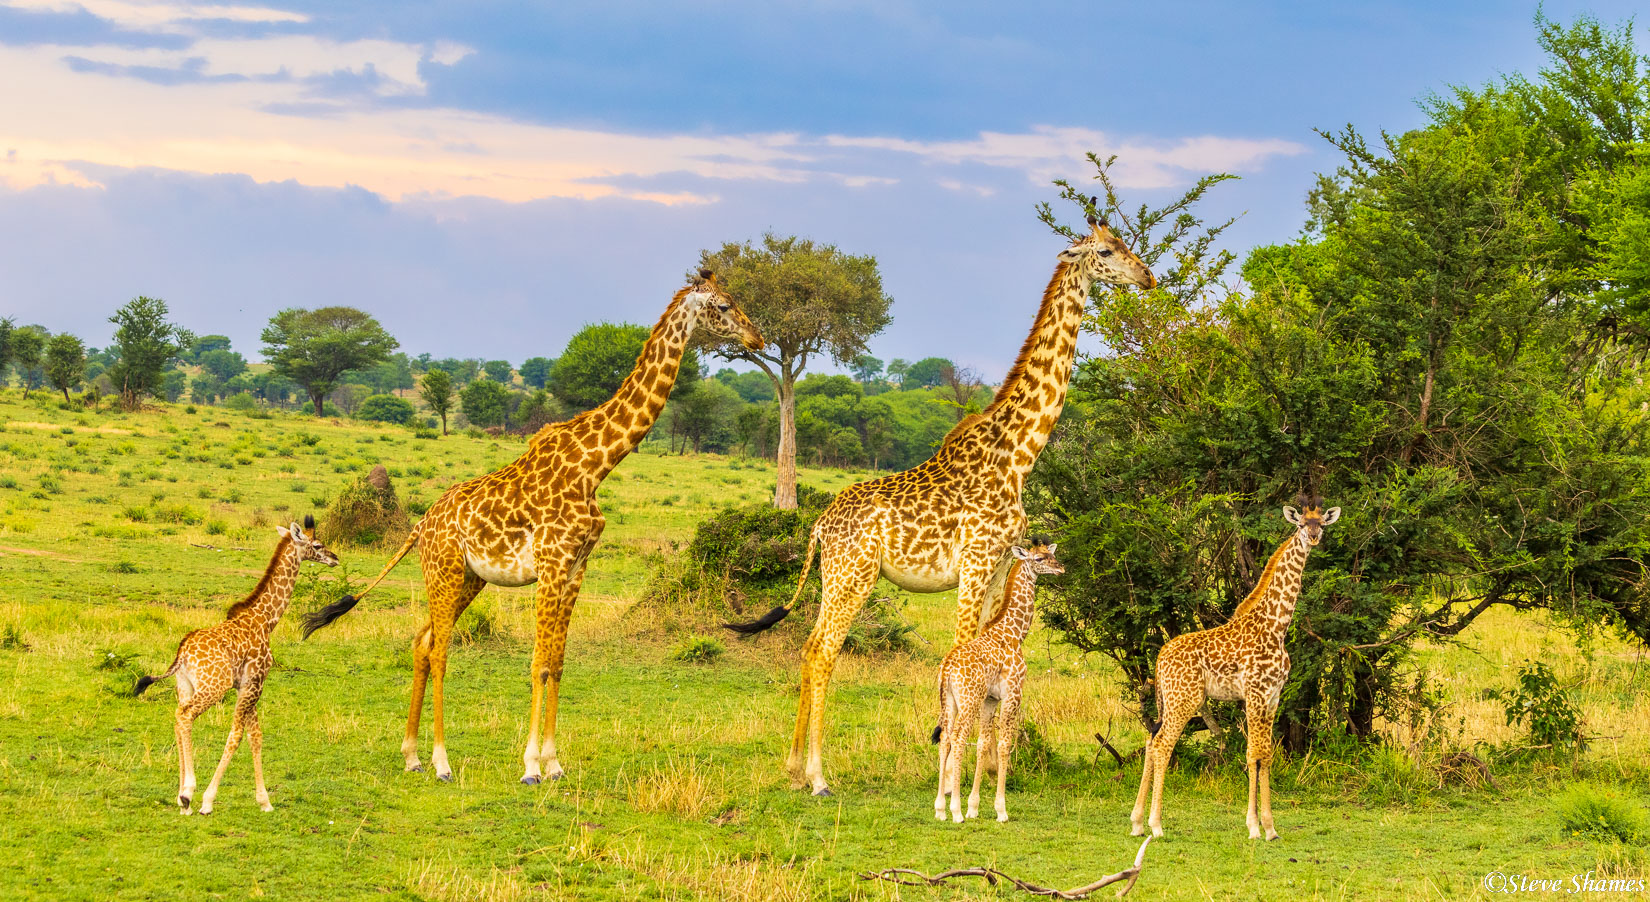 A nice little giraffe family in the Serengeti.